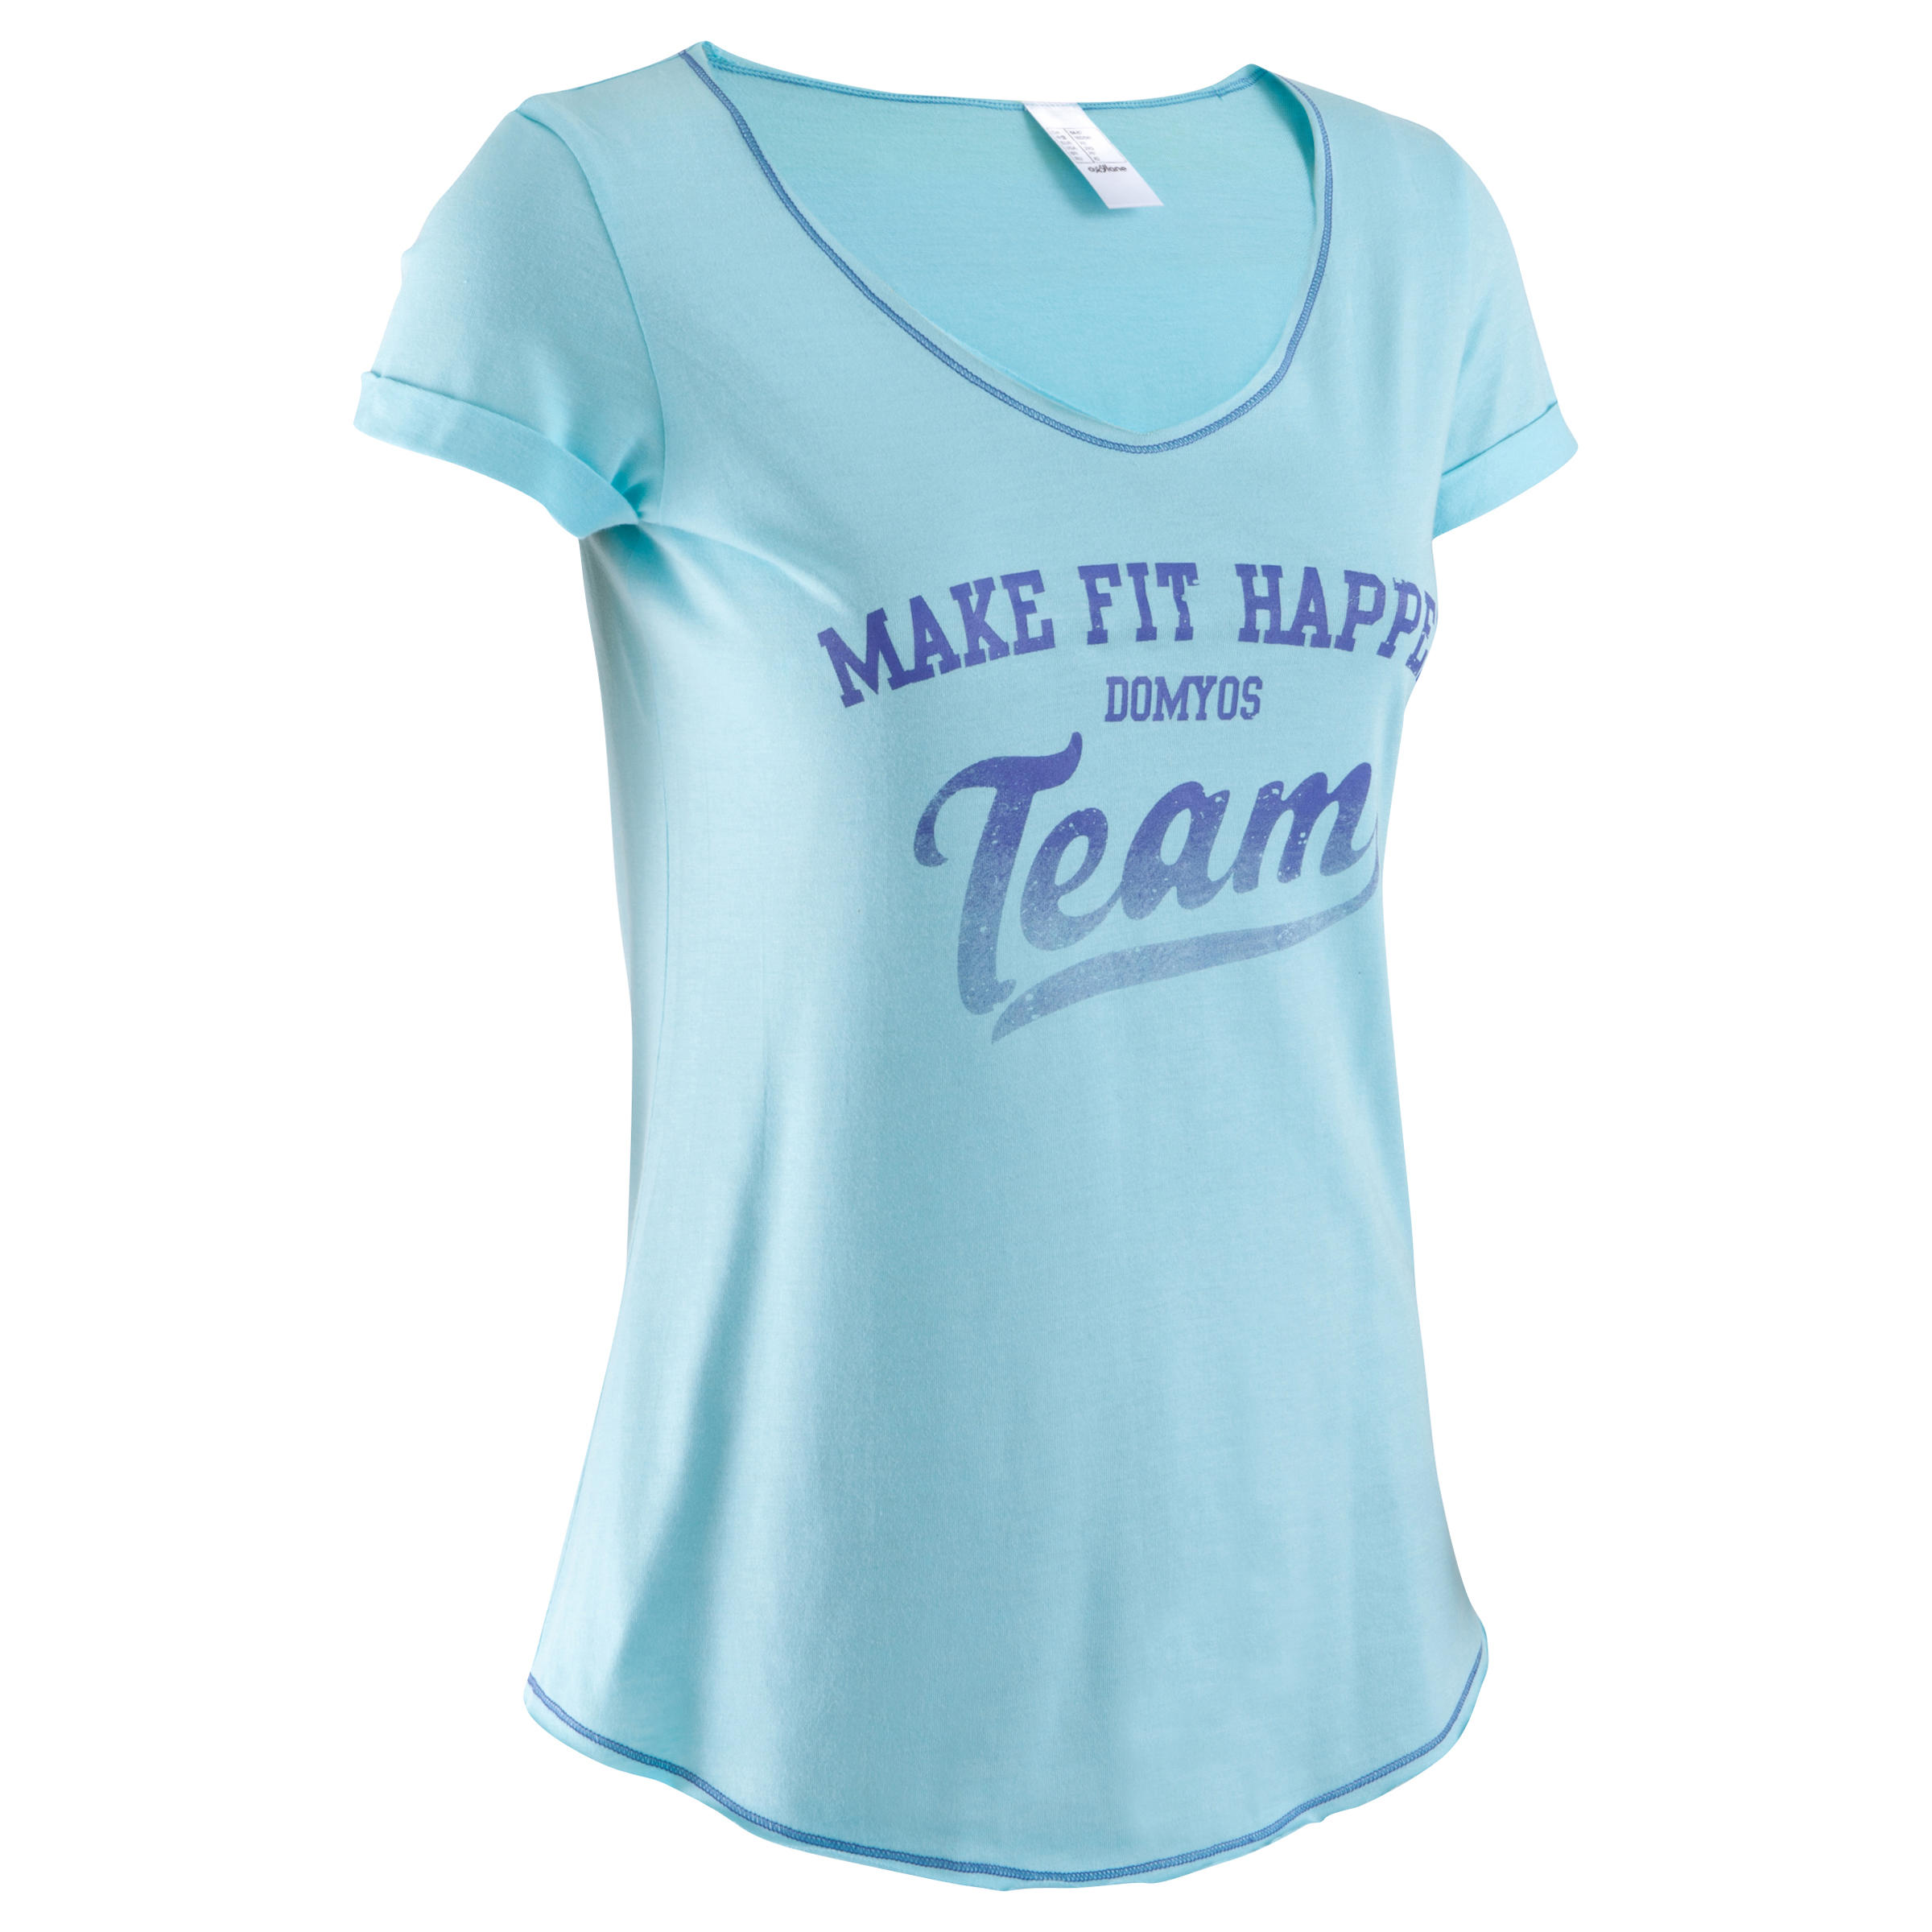 DOMYOS Women's Short-Sleeved Fitness Print T-shirt - Light Blue